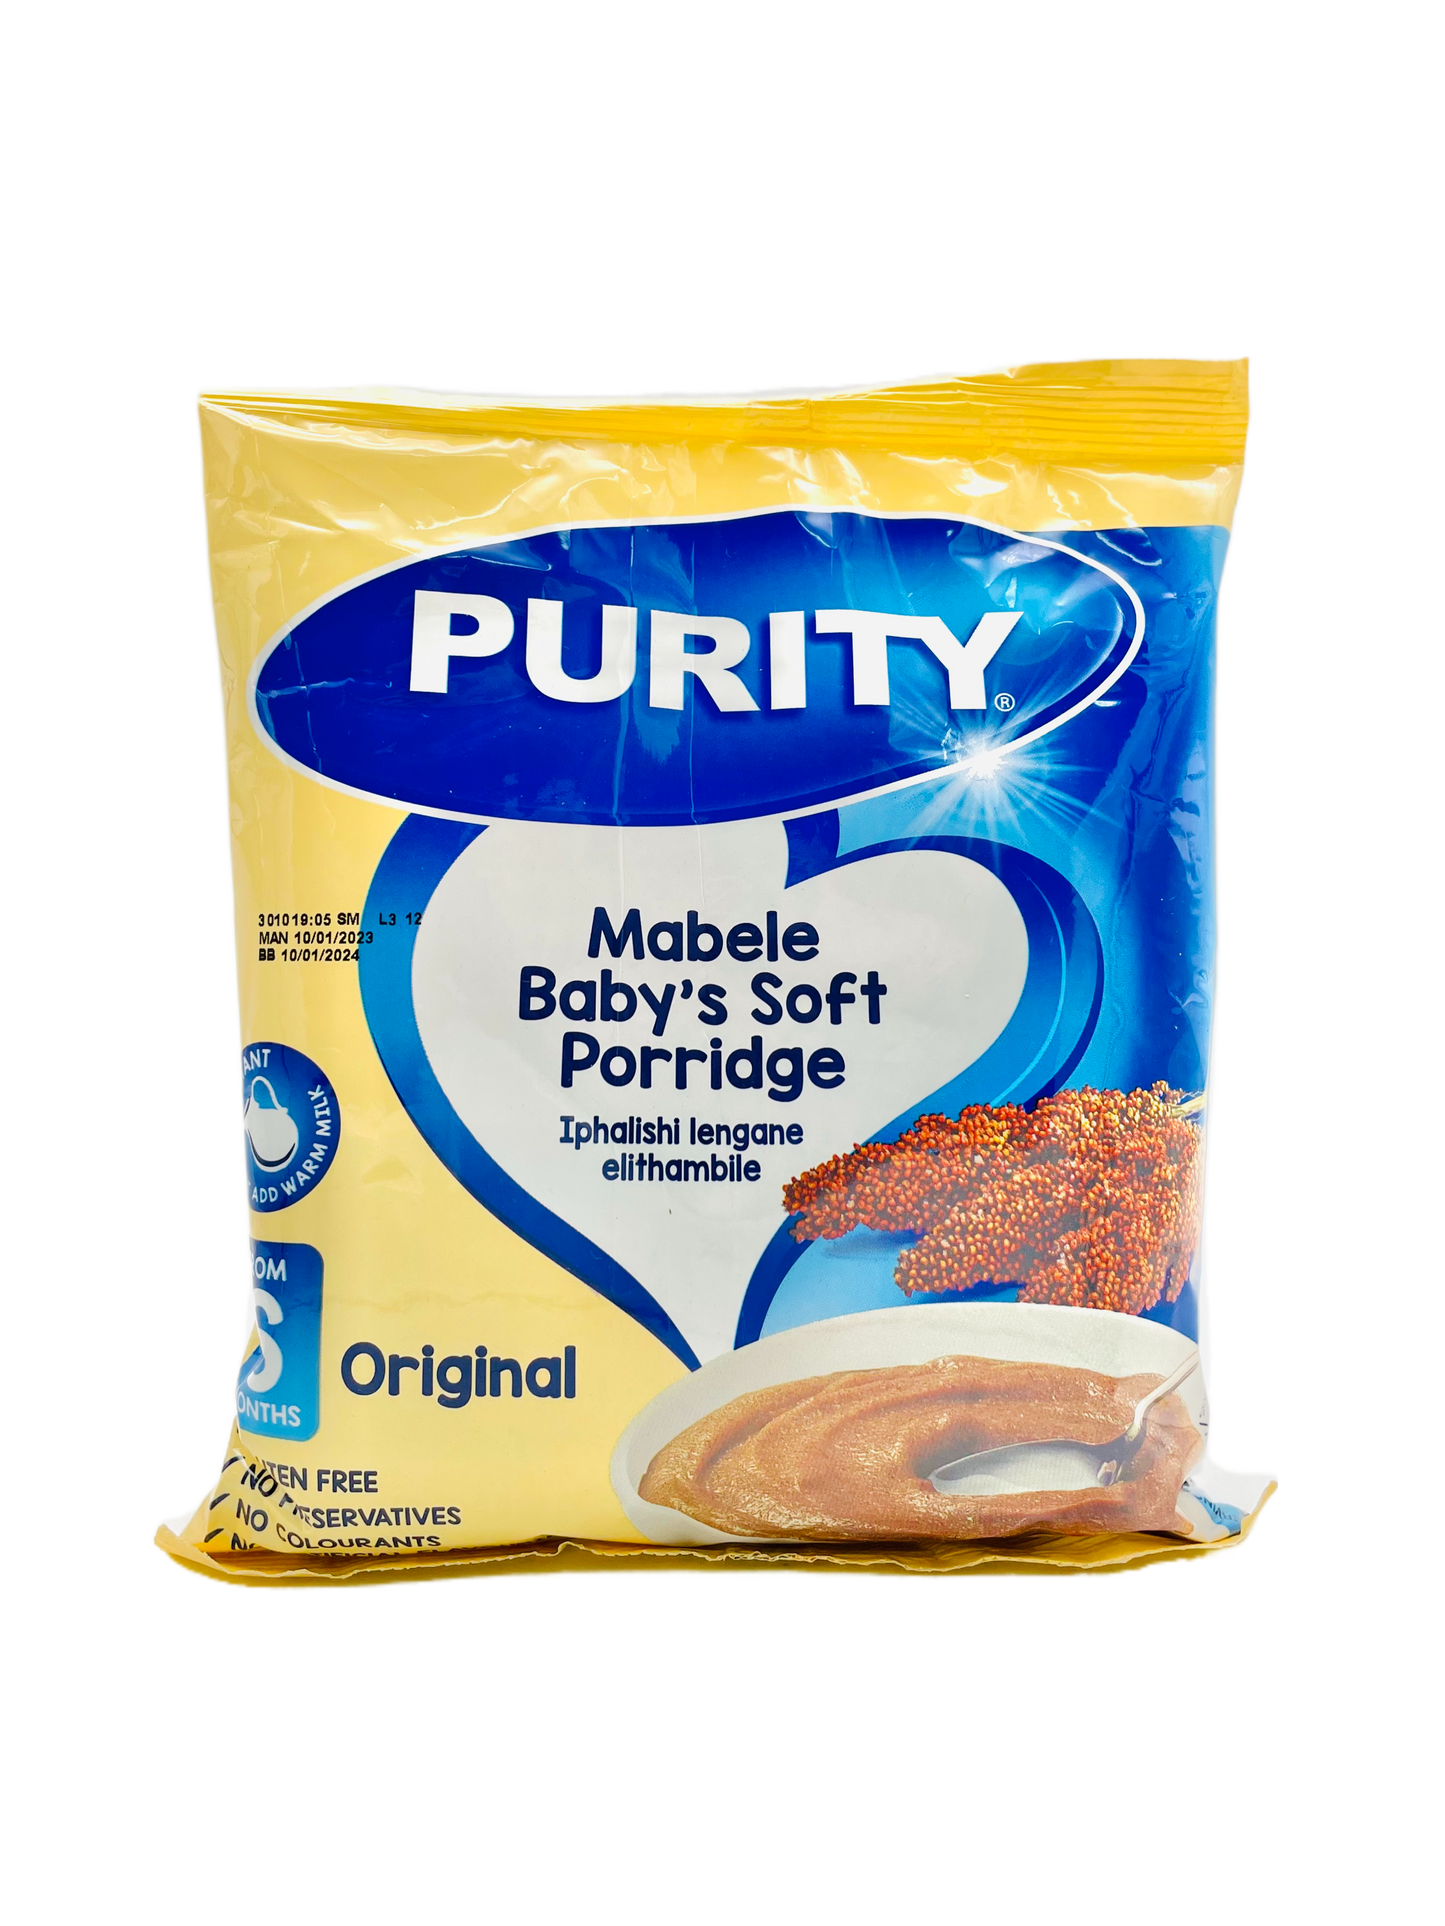 Purity Mabele Baby's Soft Porridge Original 350g